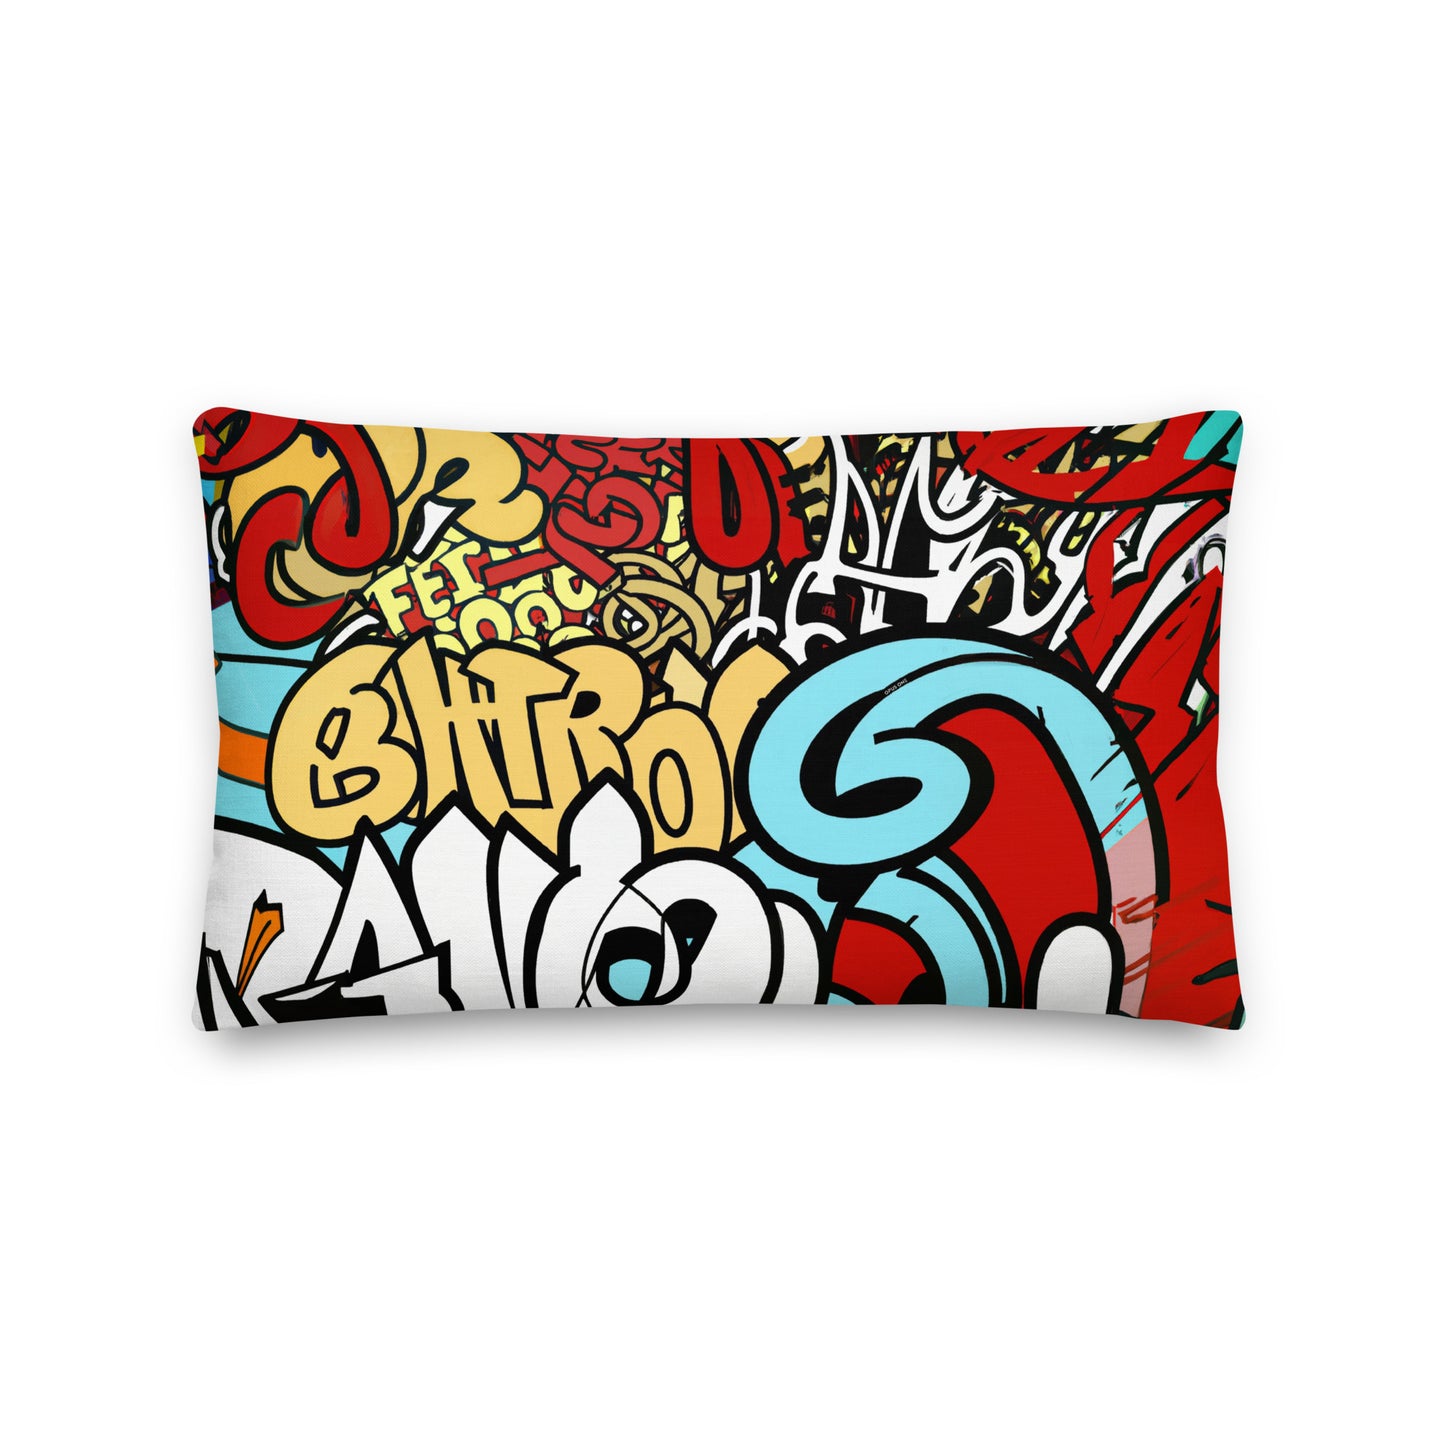 Rave Dayz (v5) Premium Pillow